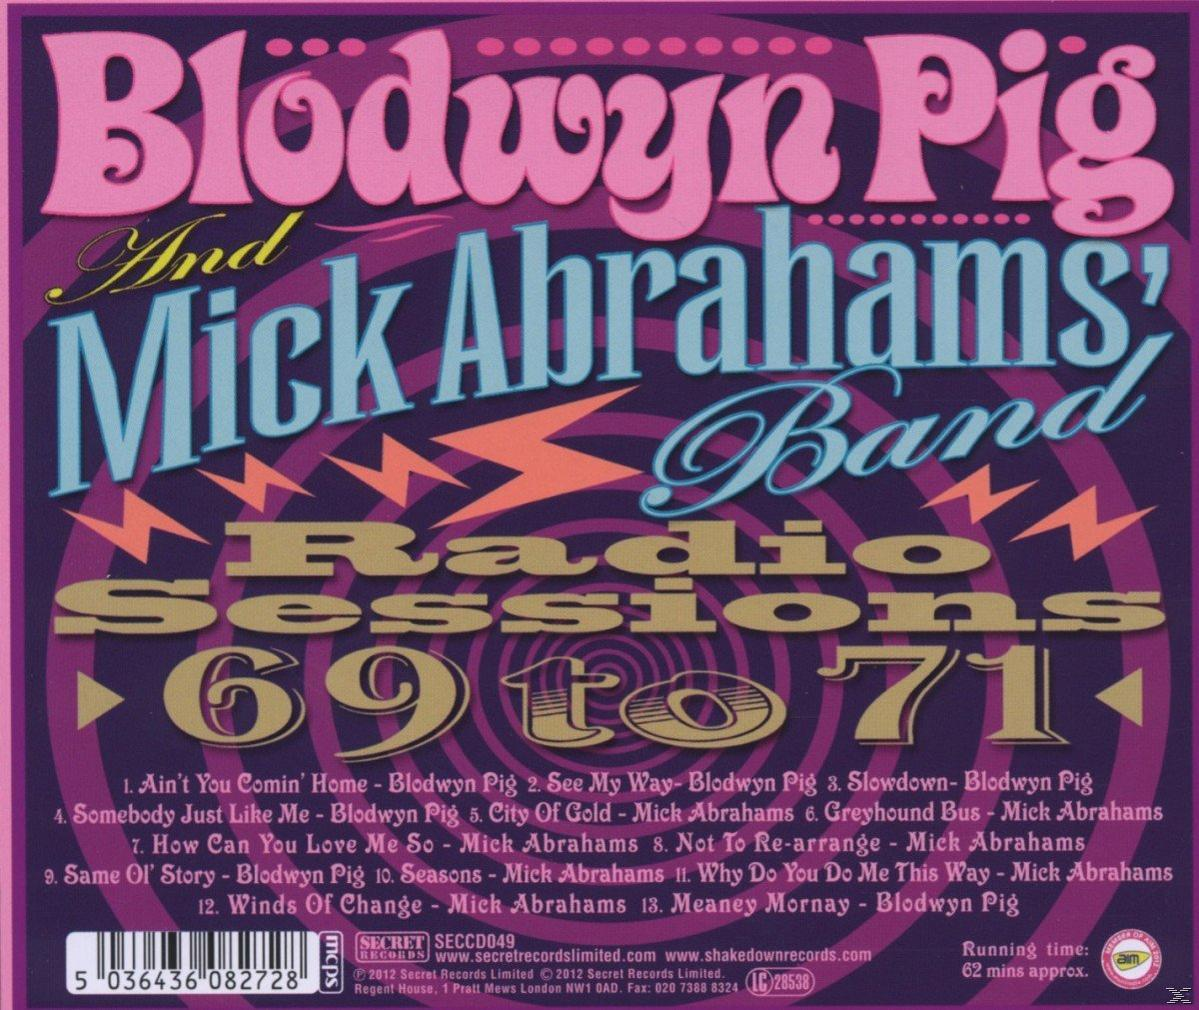 (CD) Sessions & - Radio Mick Abrahams Pig, Band - 1969-1971 Blodwyn